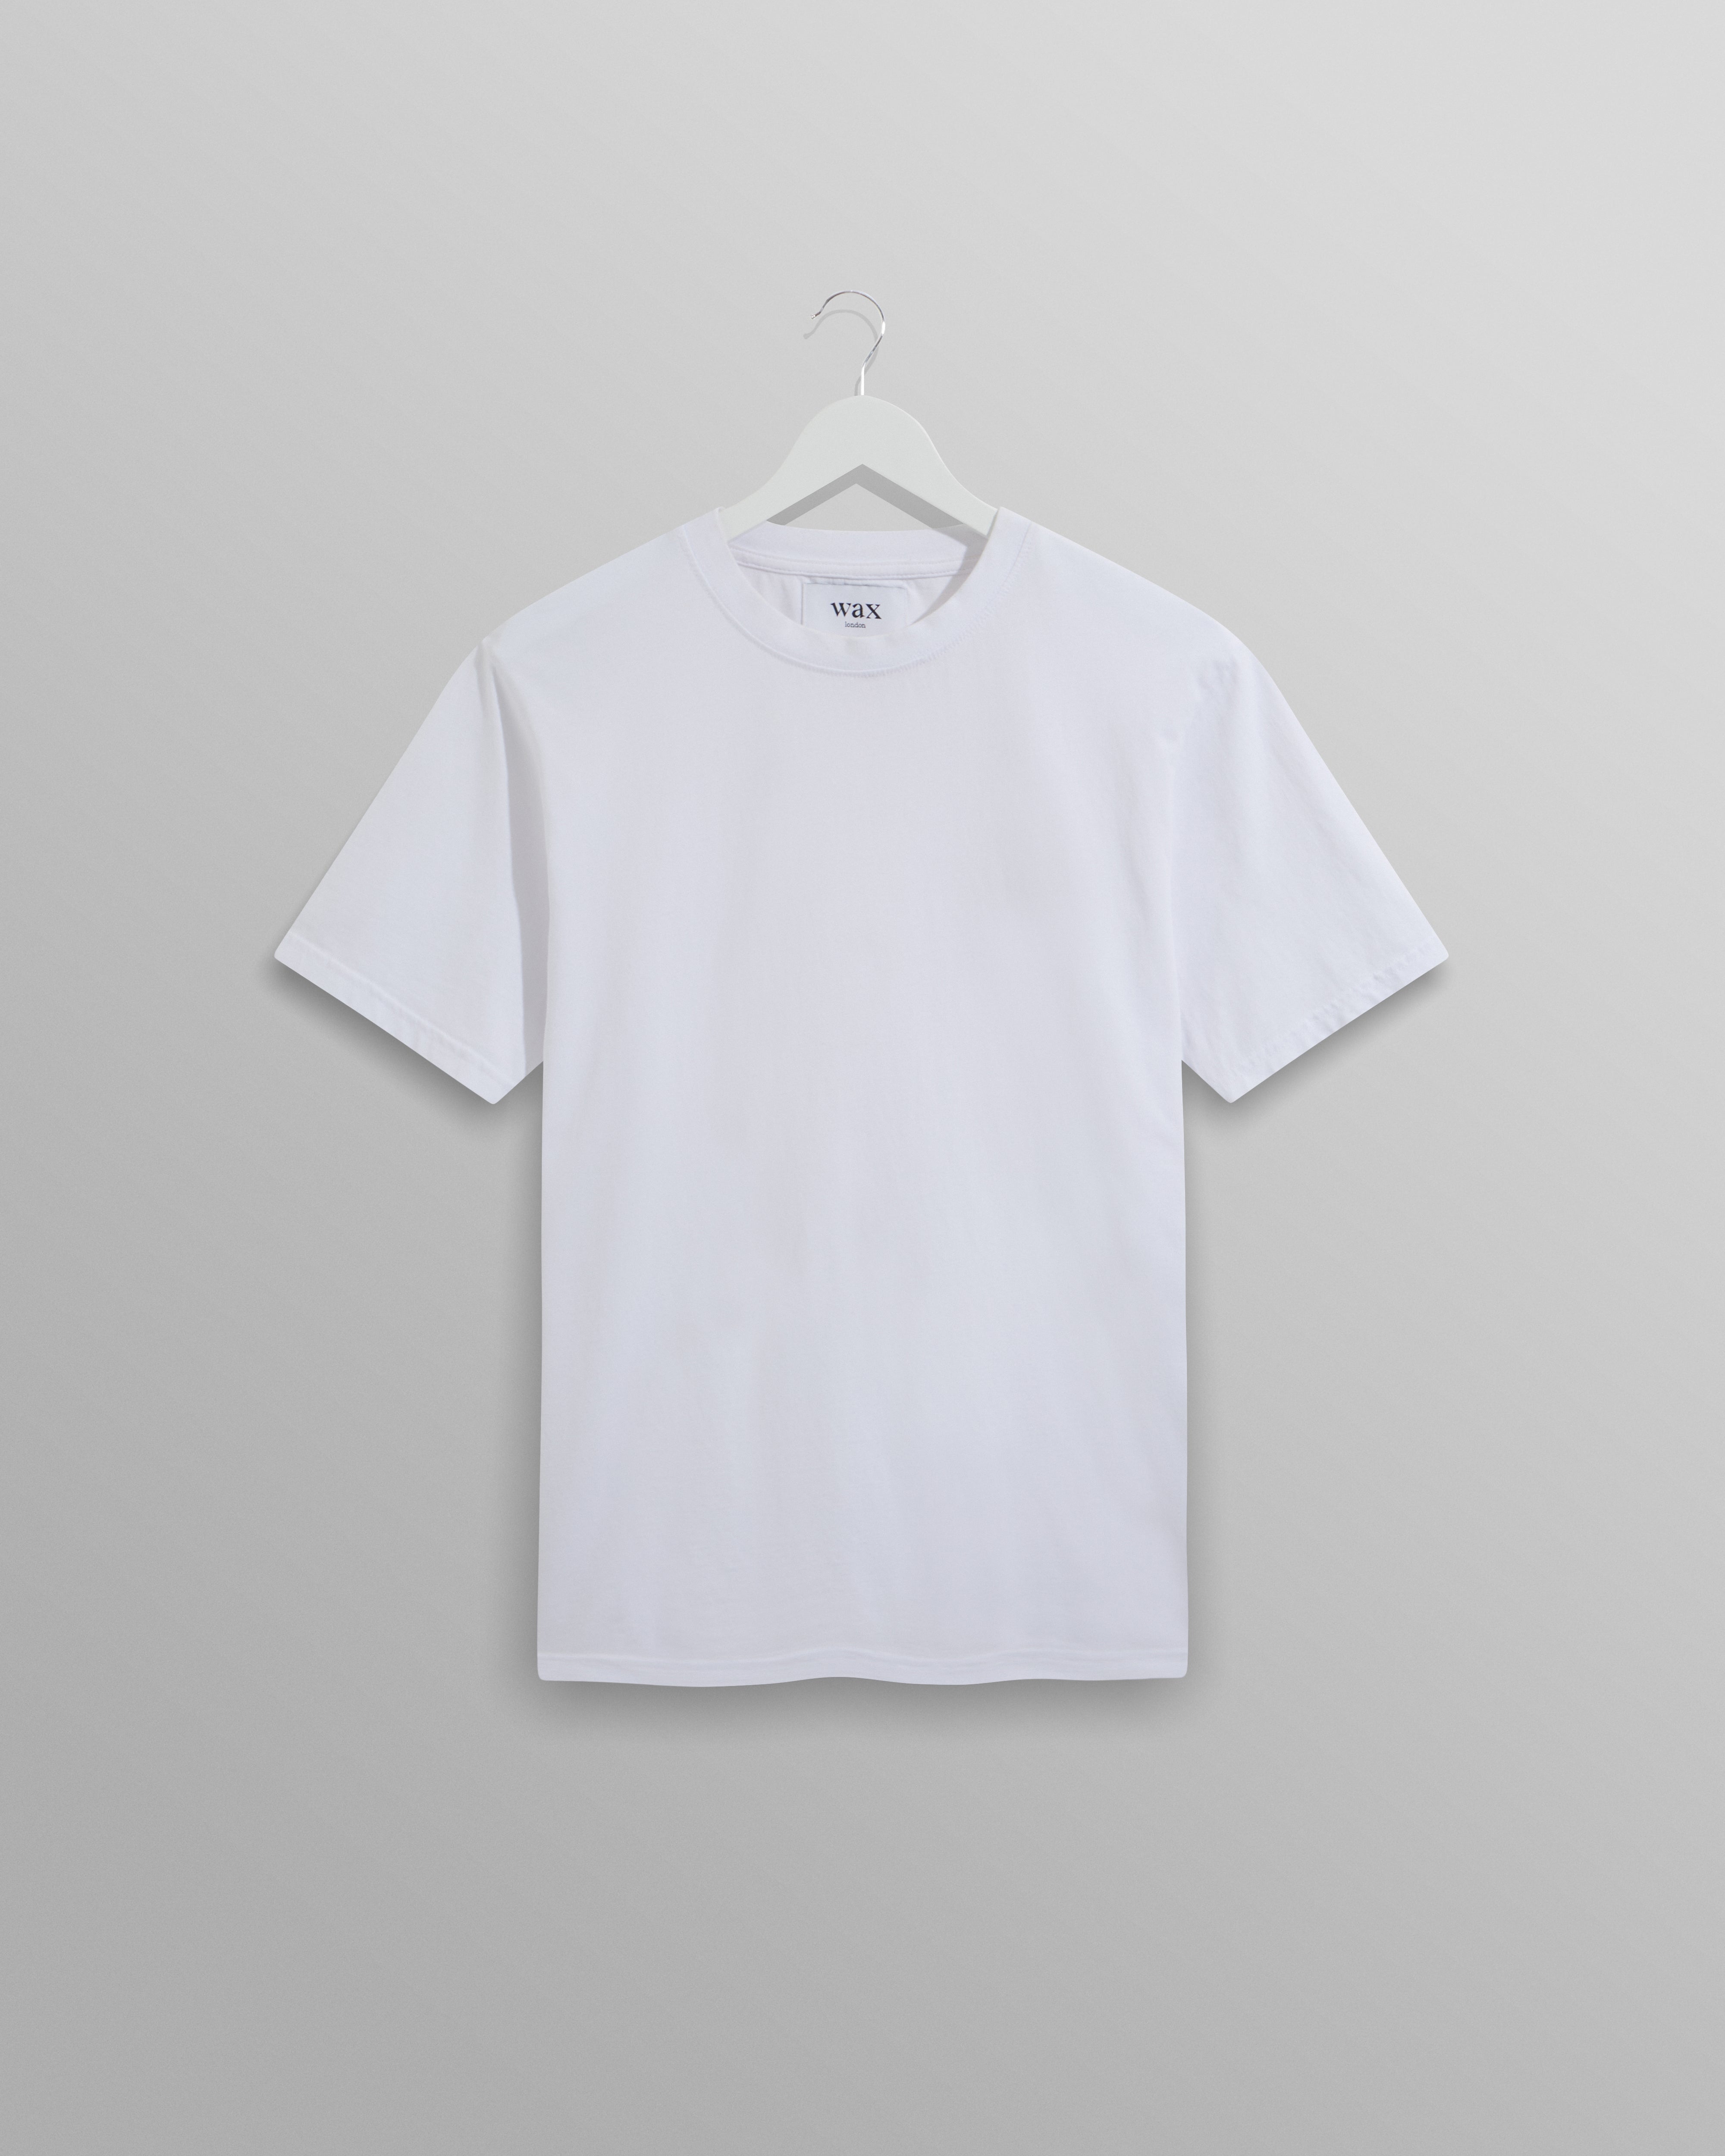 Reid T-Shirt White & Wax London